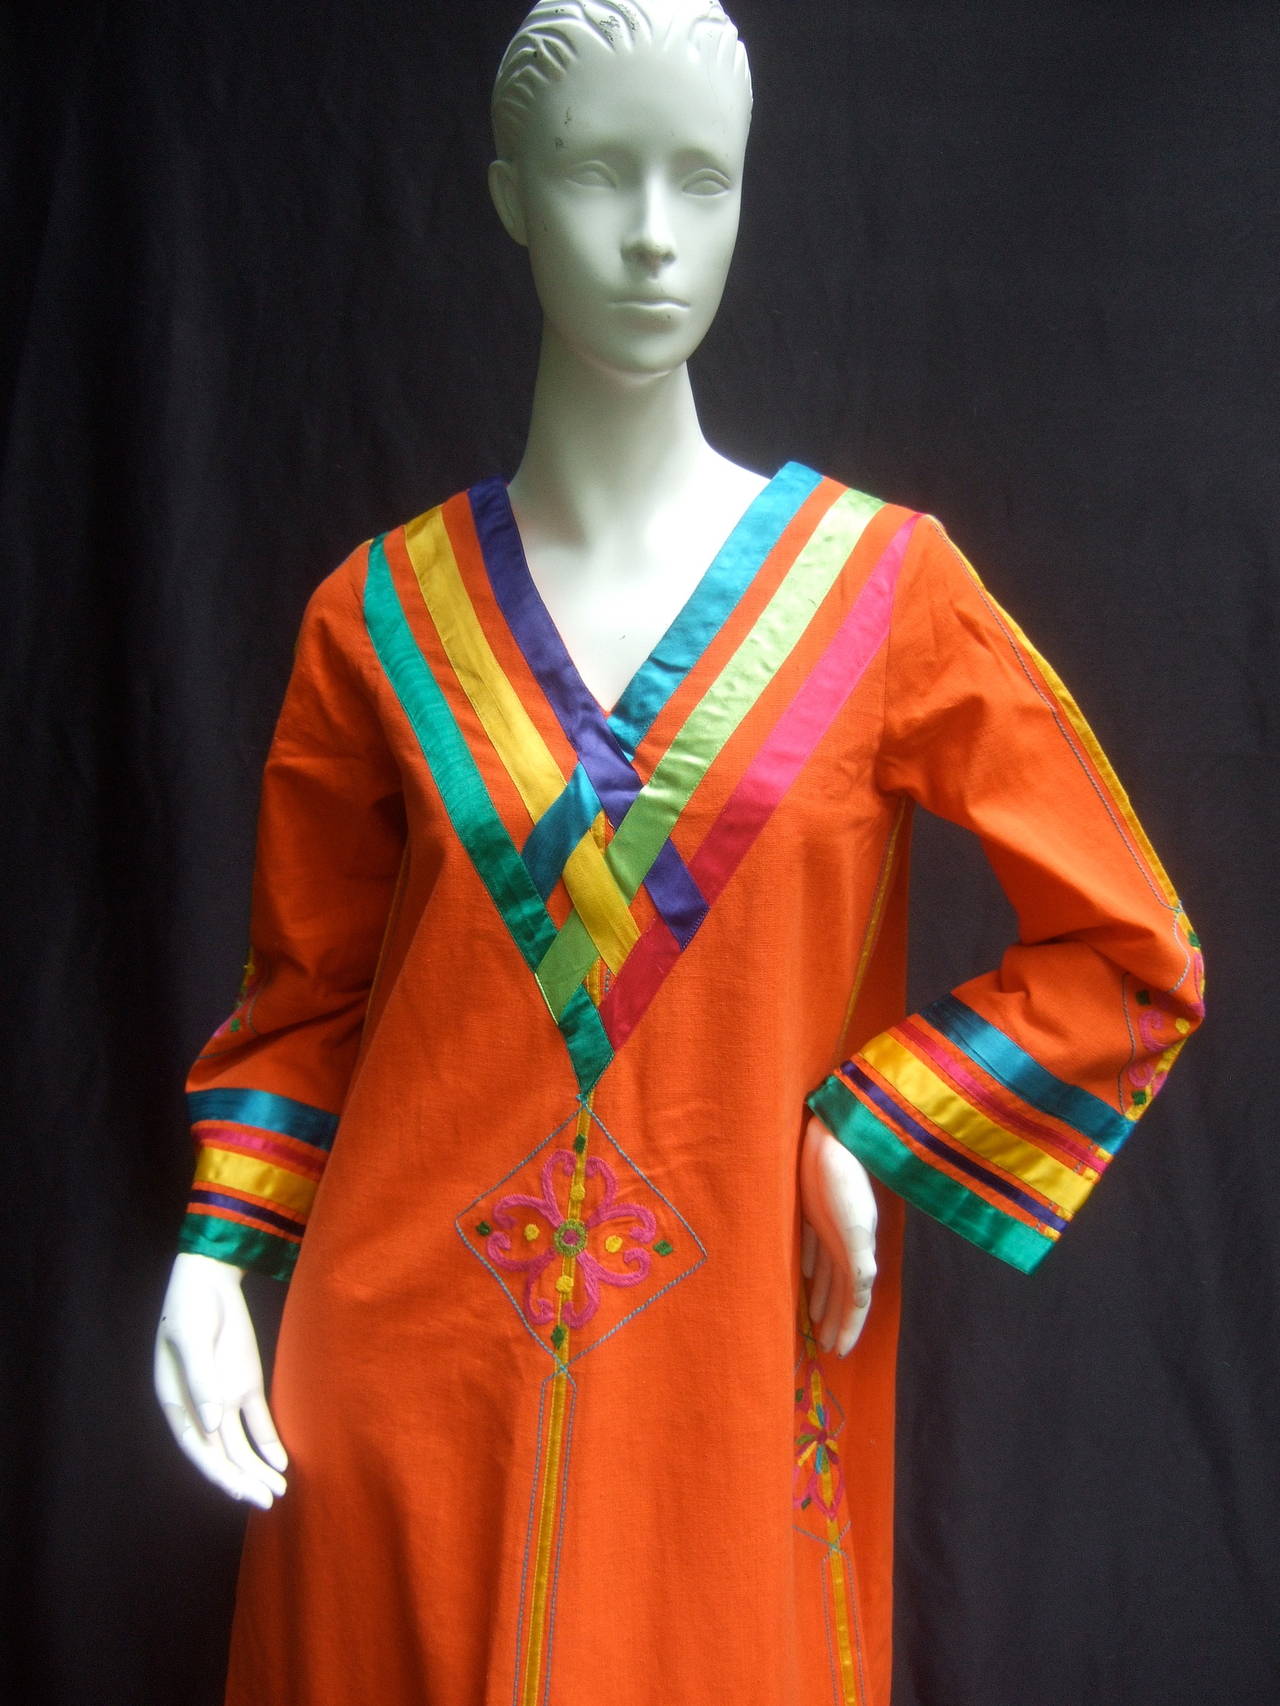 Women's Vibrant Mexican Festival Tangerine Cotton Caftan Designed by Joesfa c 1970s